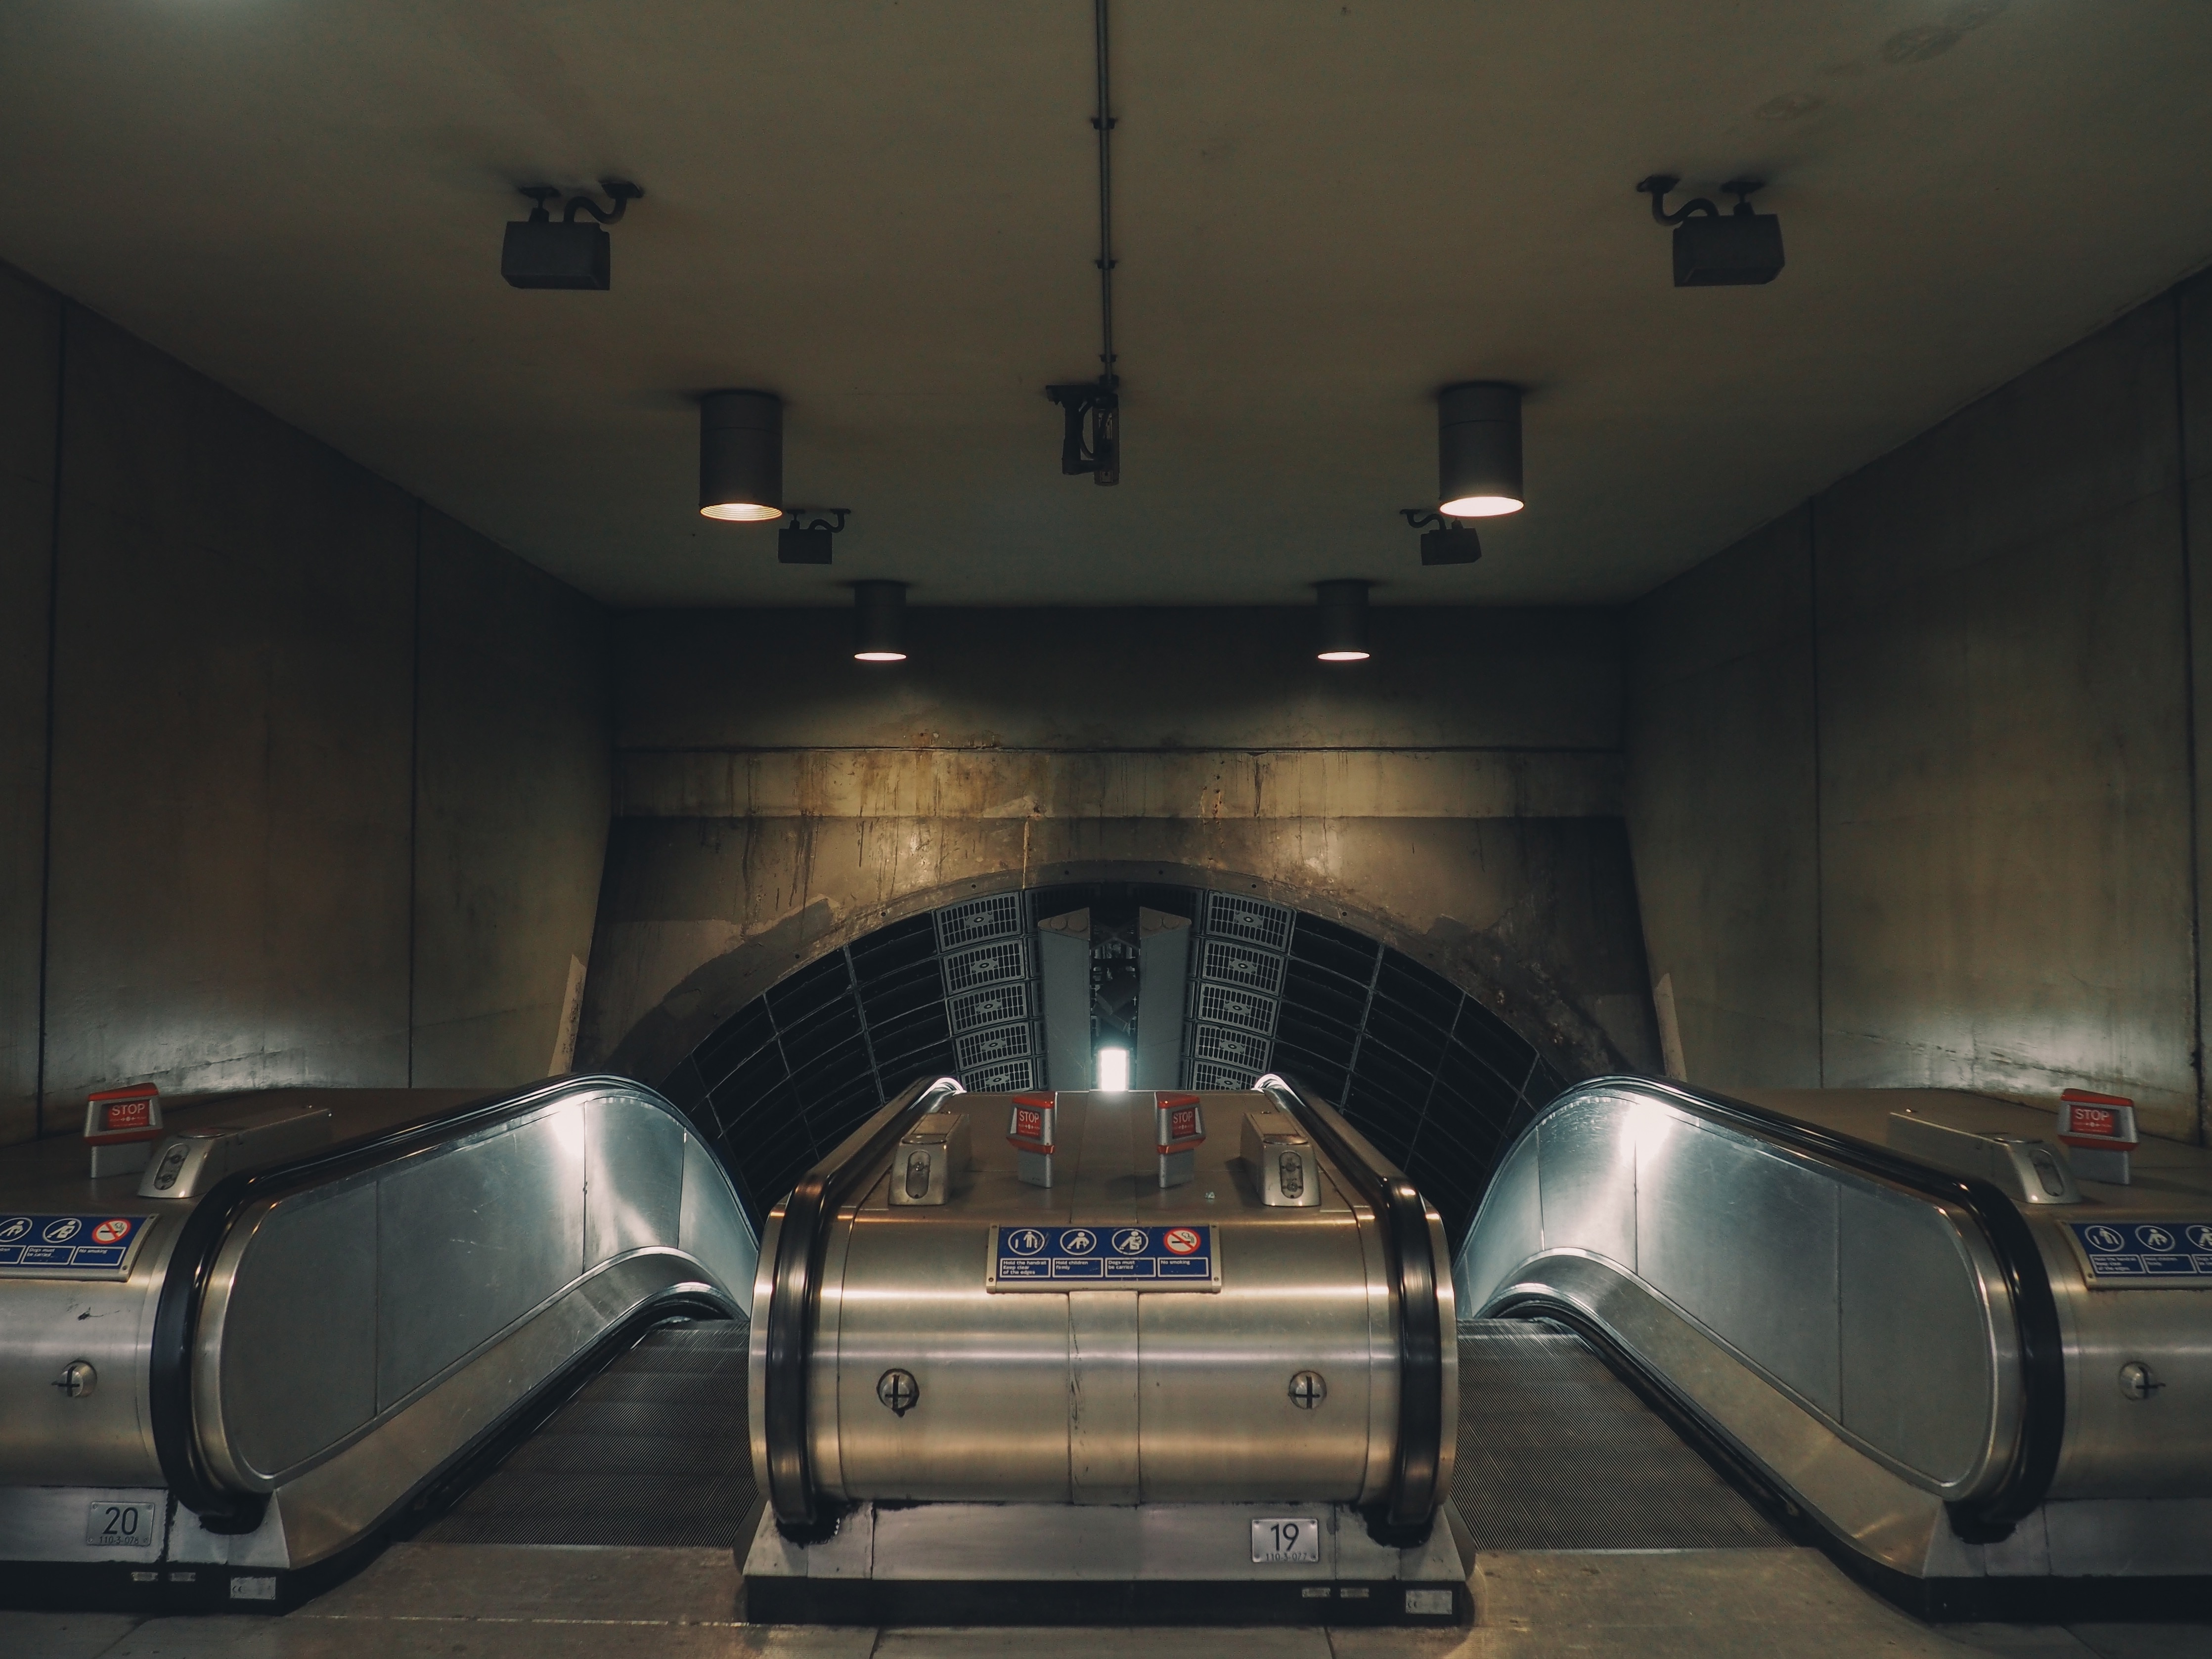 stainless steel train station escalator